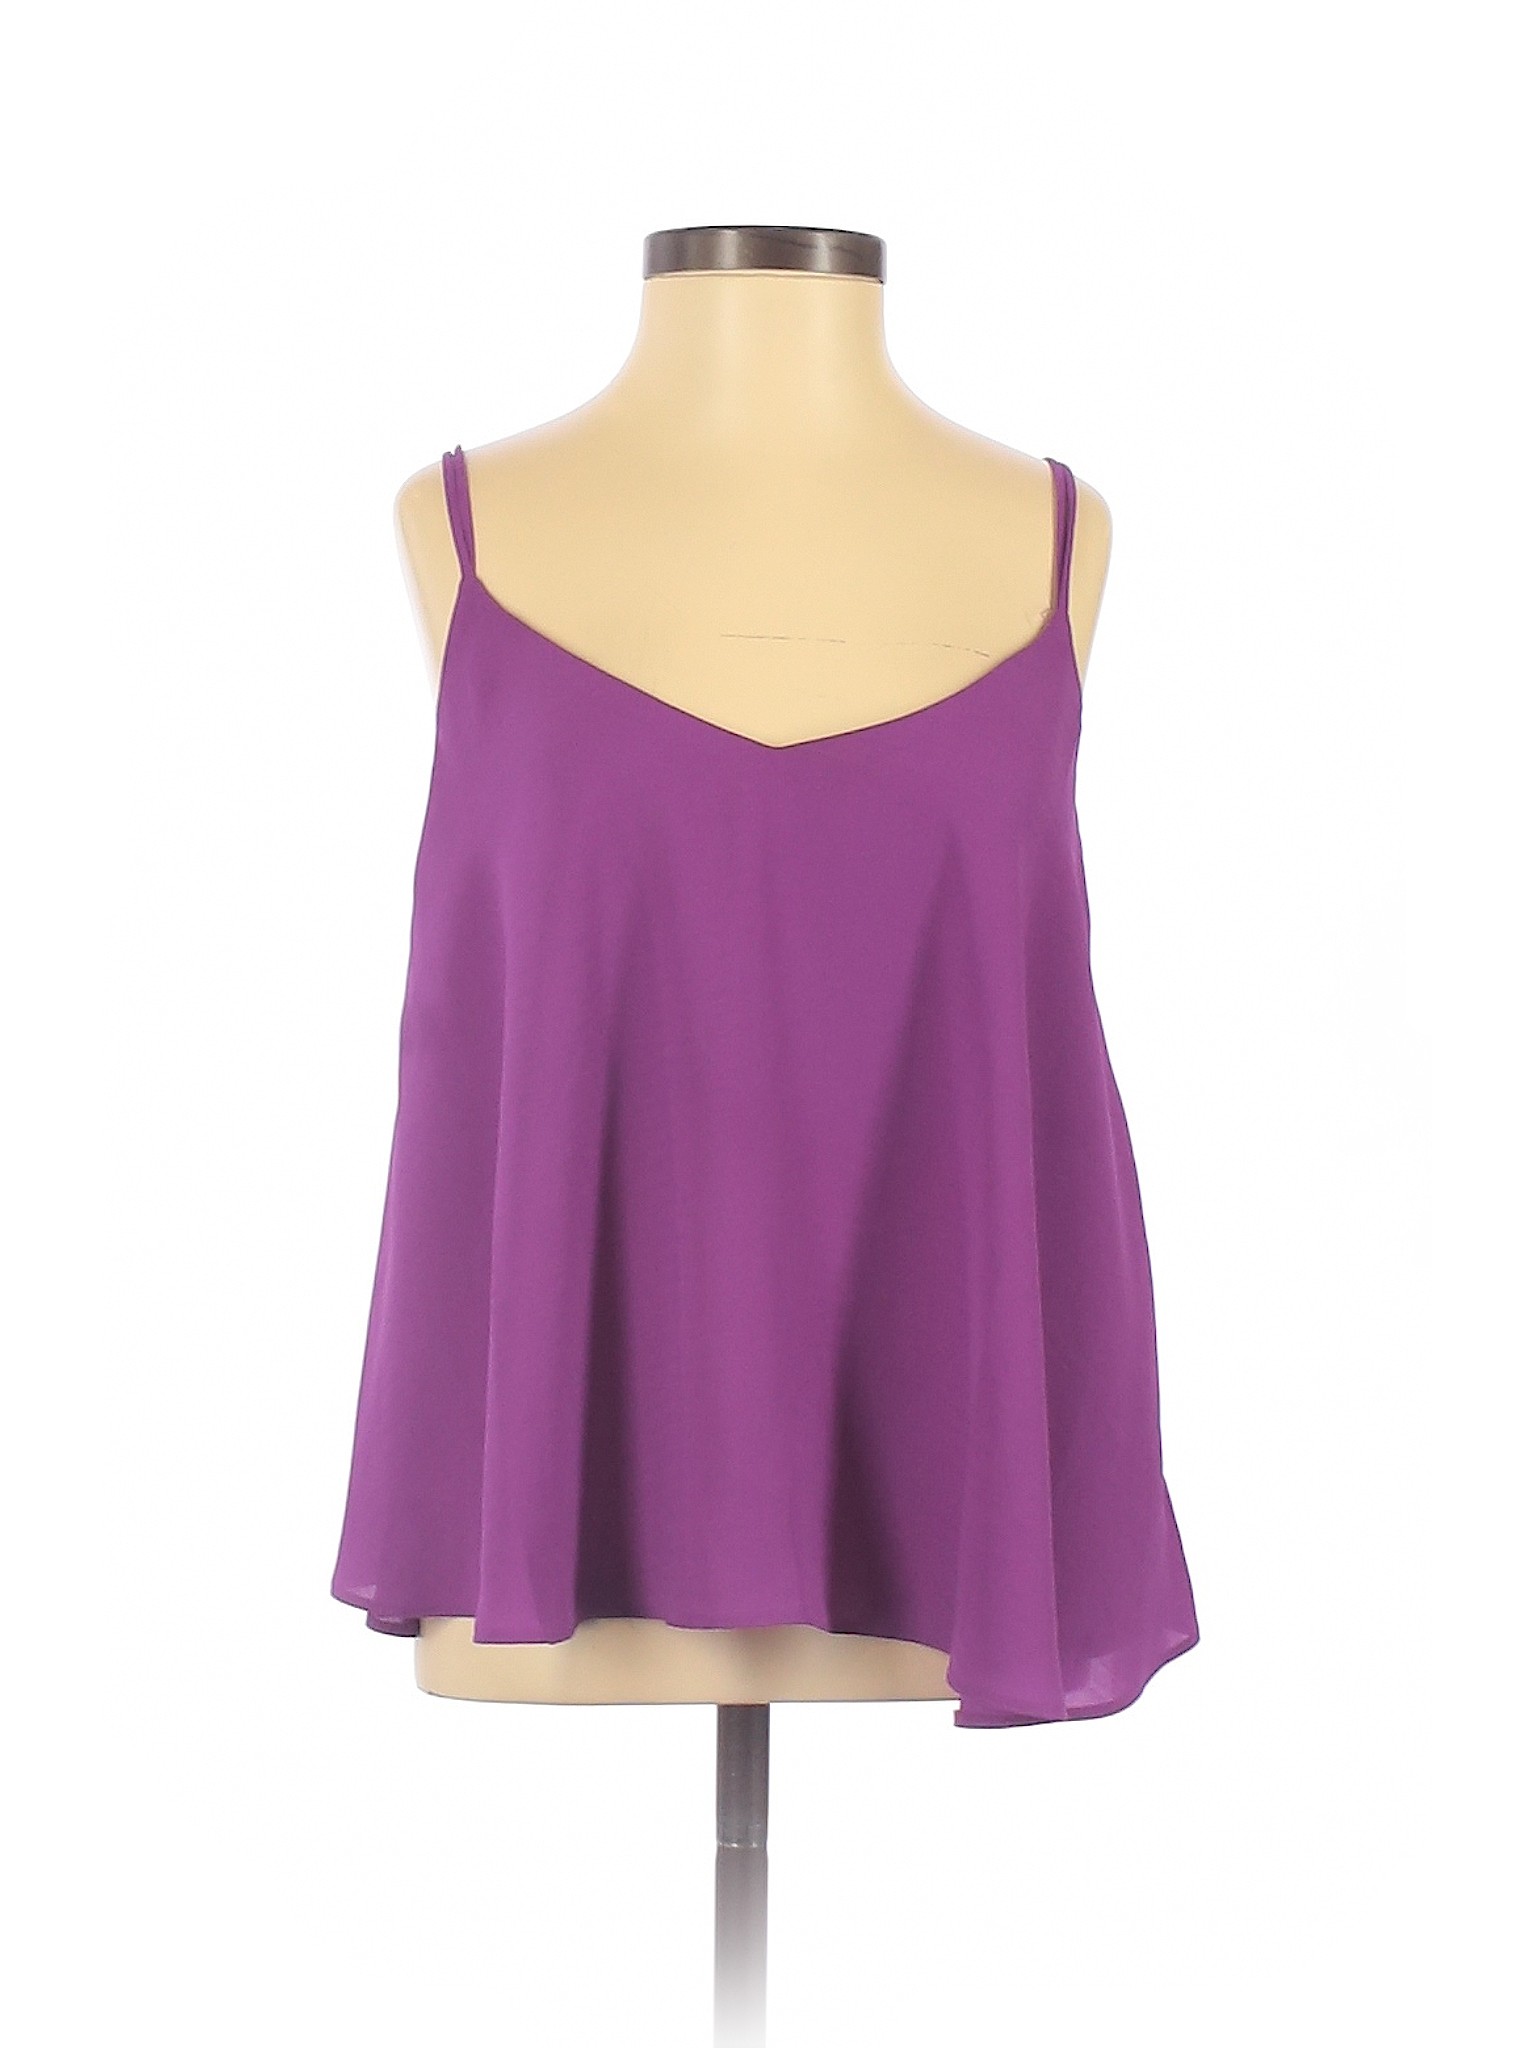 Topshop Women Purple Sleeveless Blouse 4 | eBay